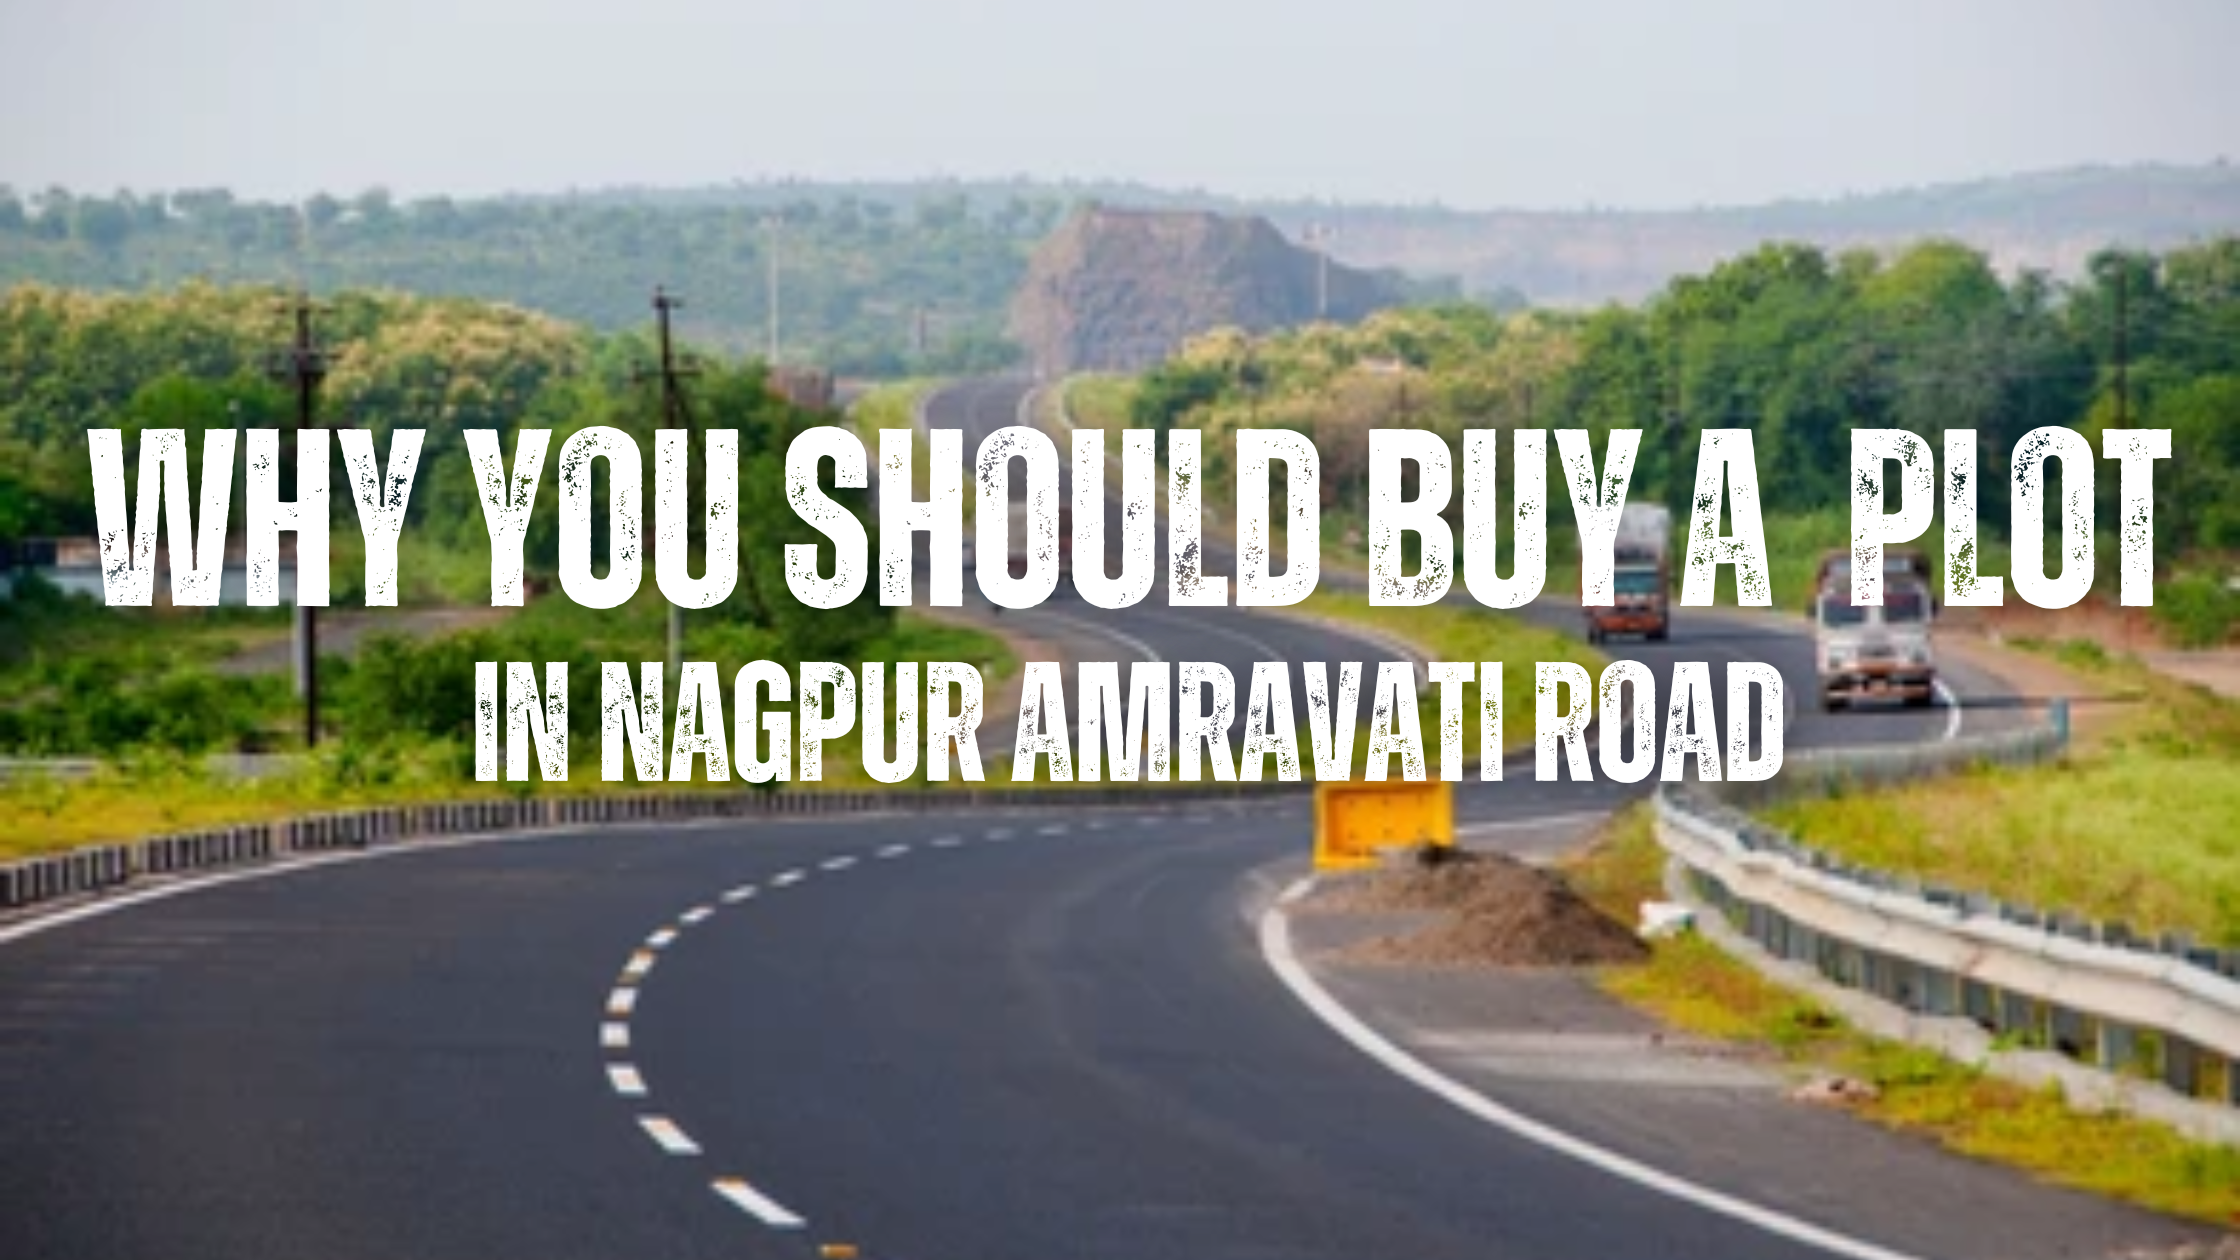 Why You Should Buy a Plot in Nagpur Amravati Road